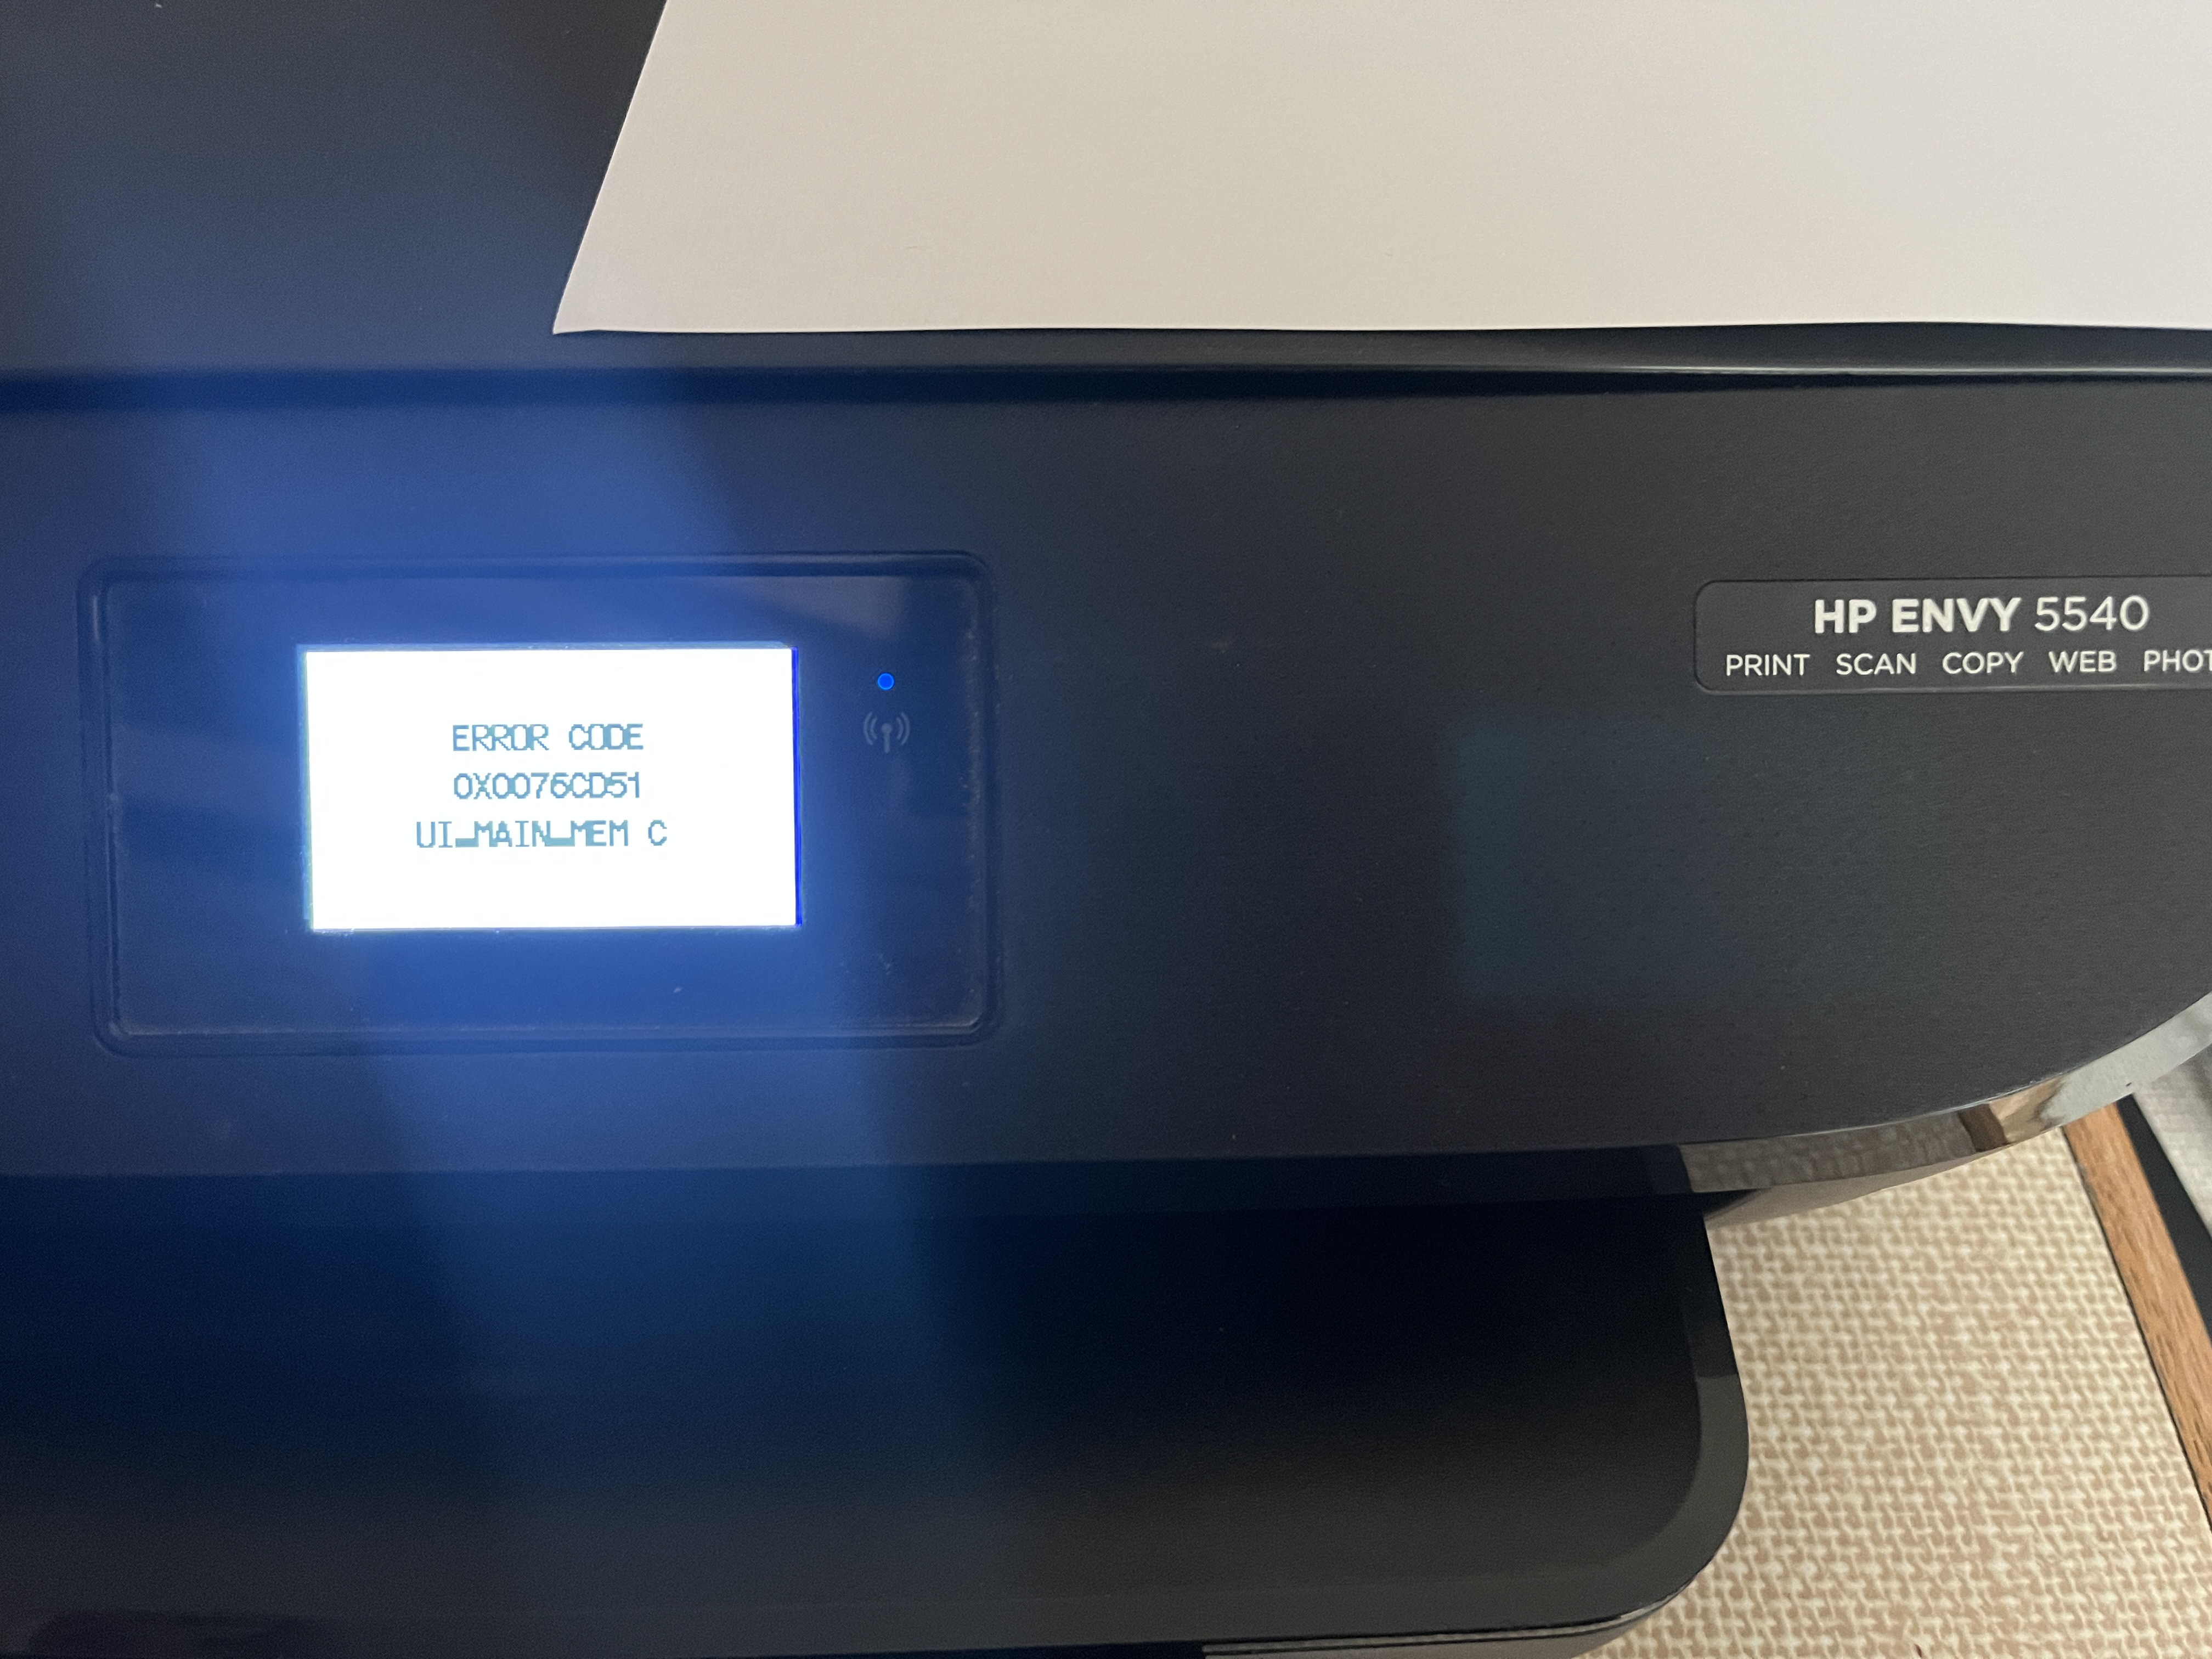 Printer - ENVY 5540 cannot print as printer longe... HP Support Community - 8534207